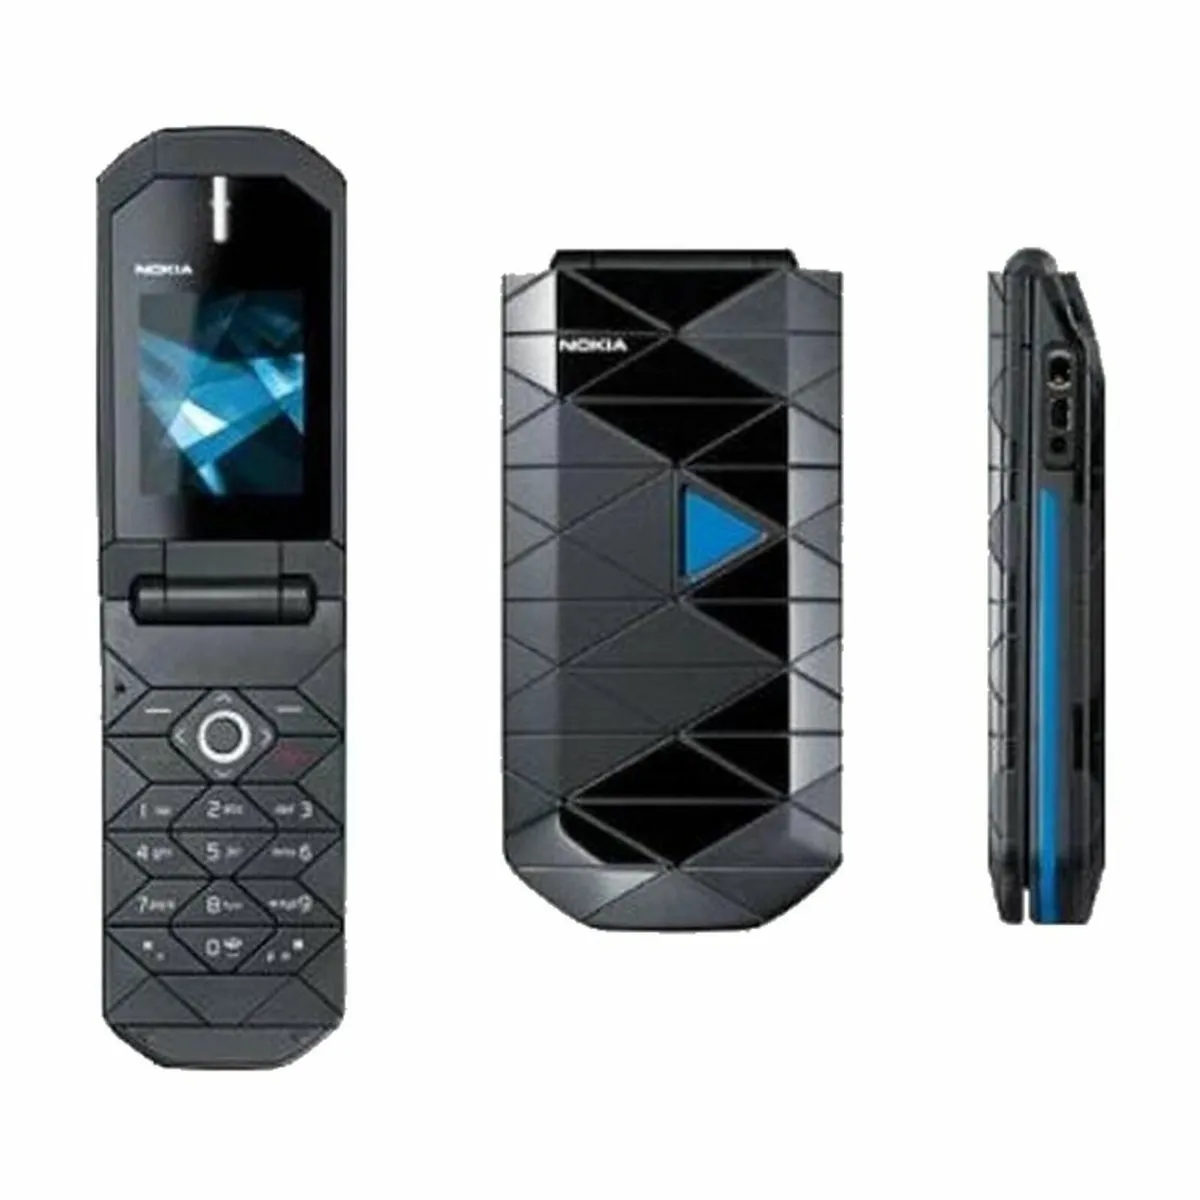 Nokia 7070 Prism Dual Sim – Black & Blue Accent